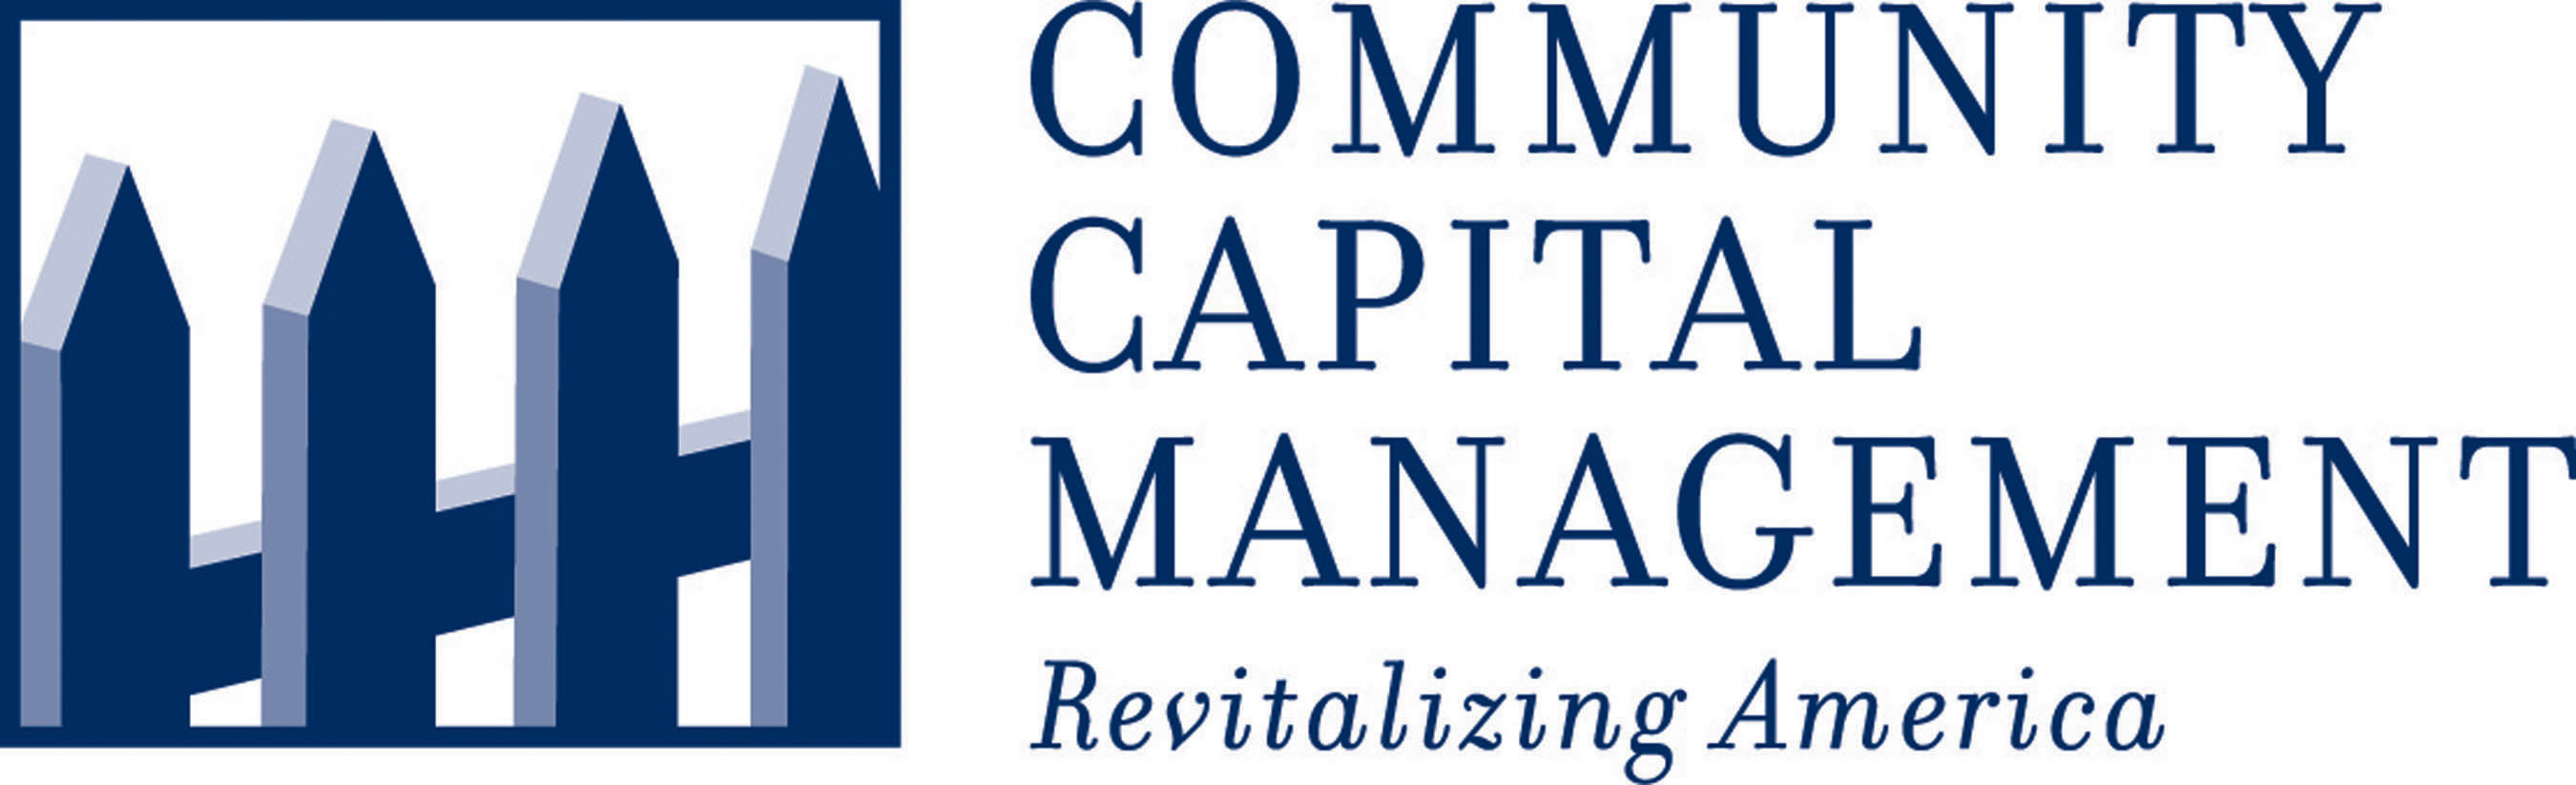 Community Capital Management Logo. (PRNewsFoto/Community Capital Management) (PRNewsFoto/)